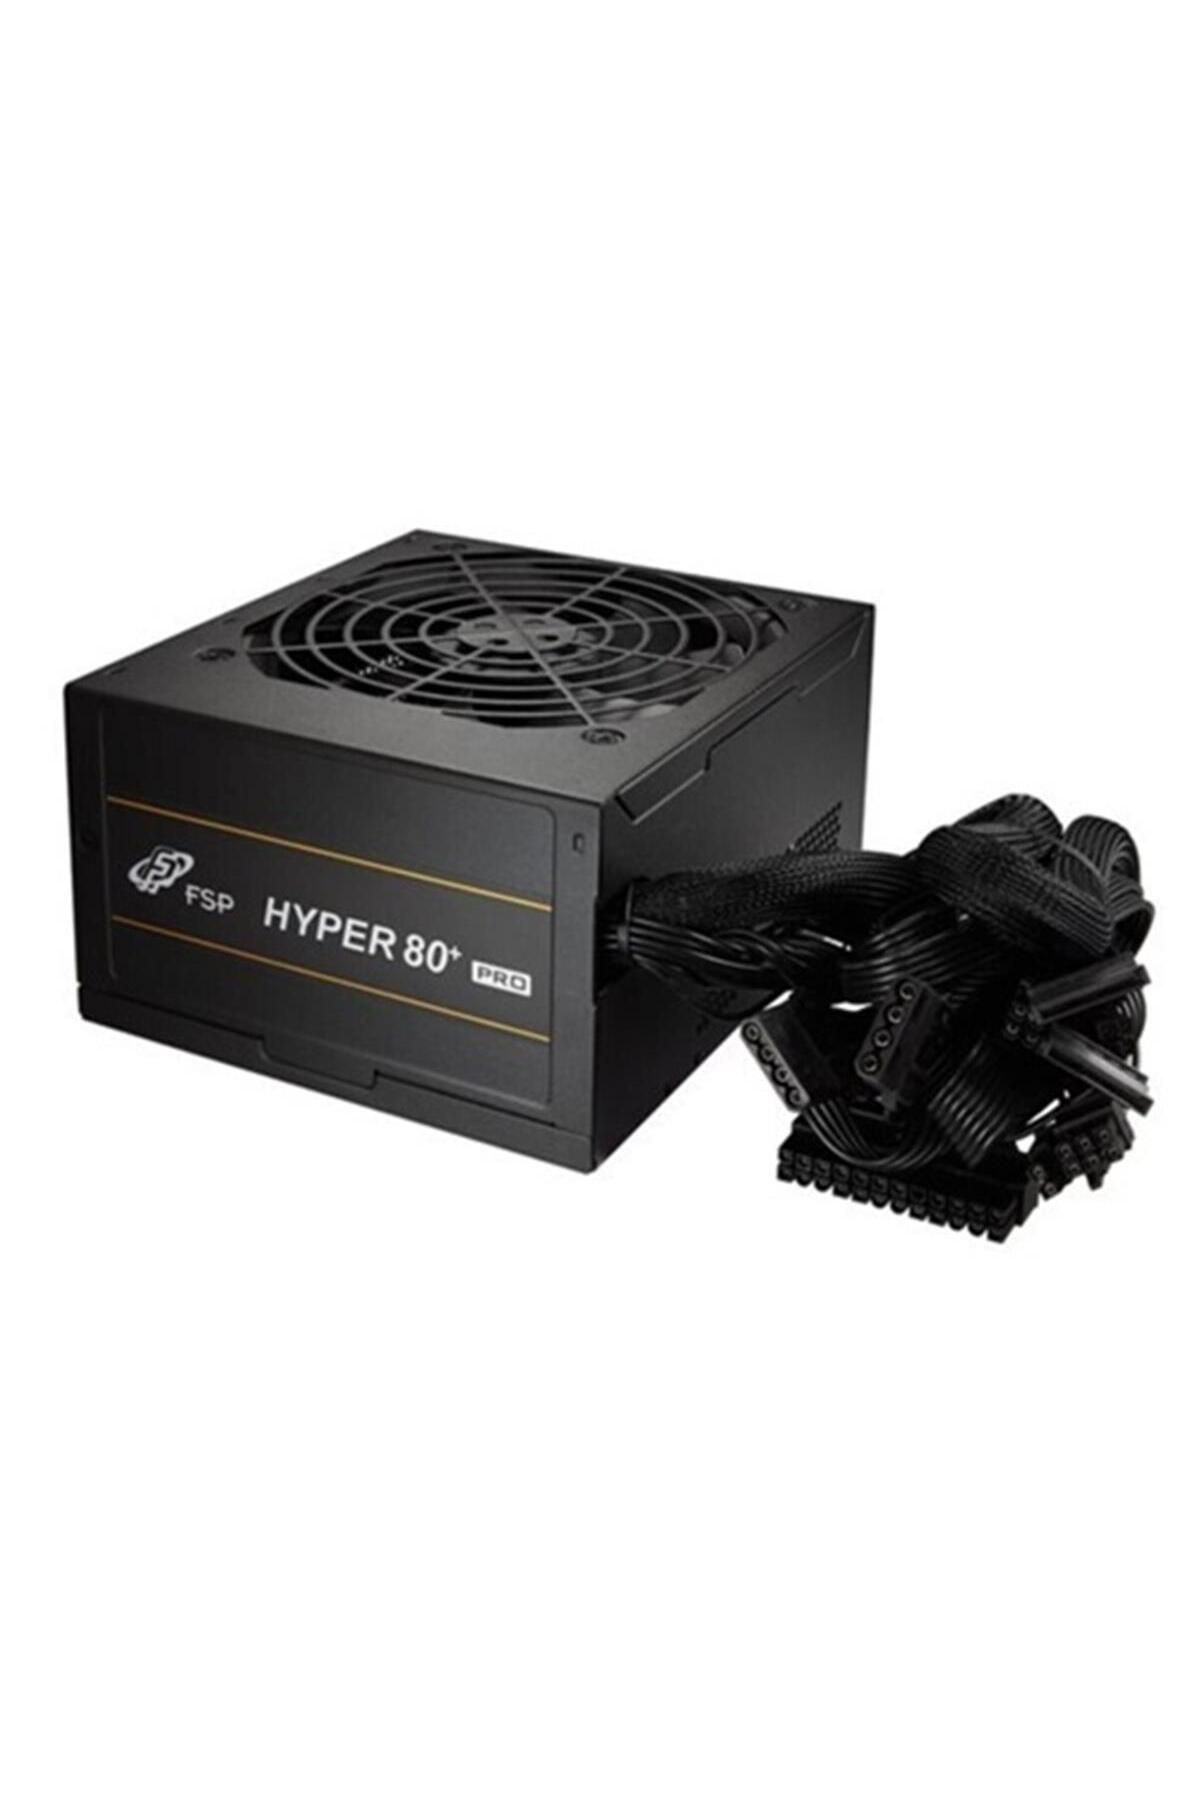 FSP Hyper H3-650 80 Pro 650w Power Supply (BULK)